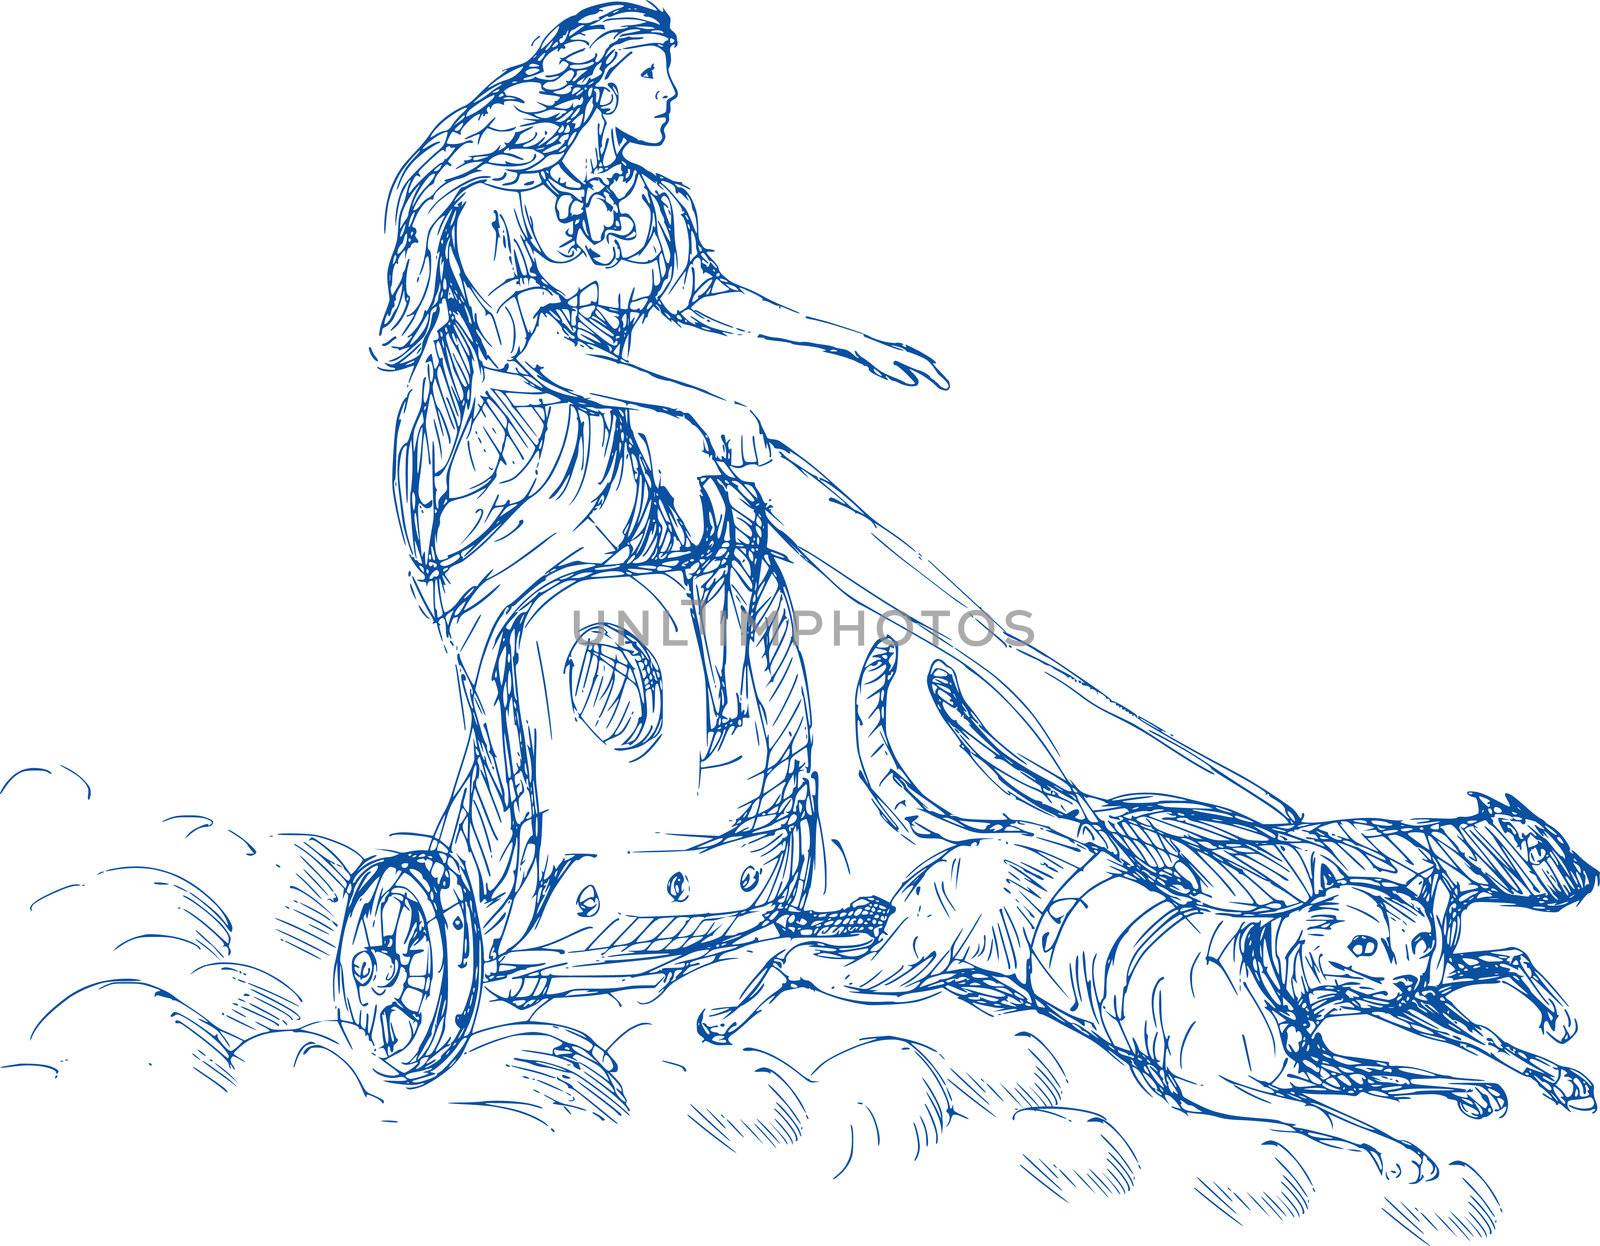 Freya Norse goddess of love and beauty by patrimonio